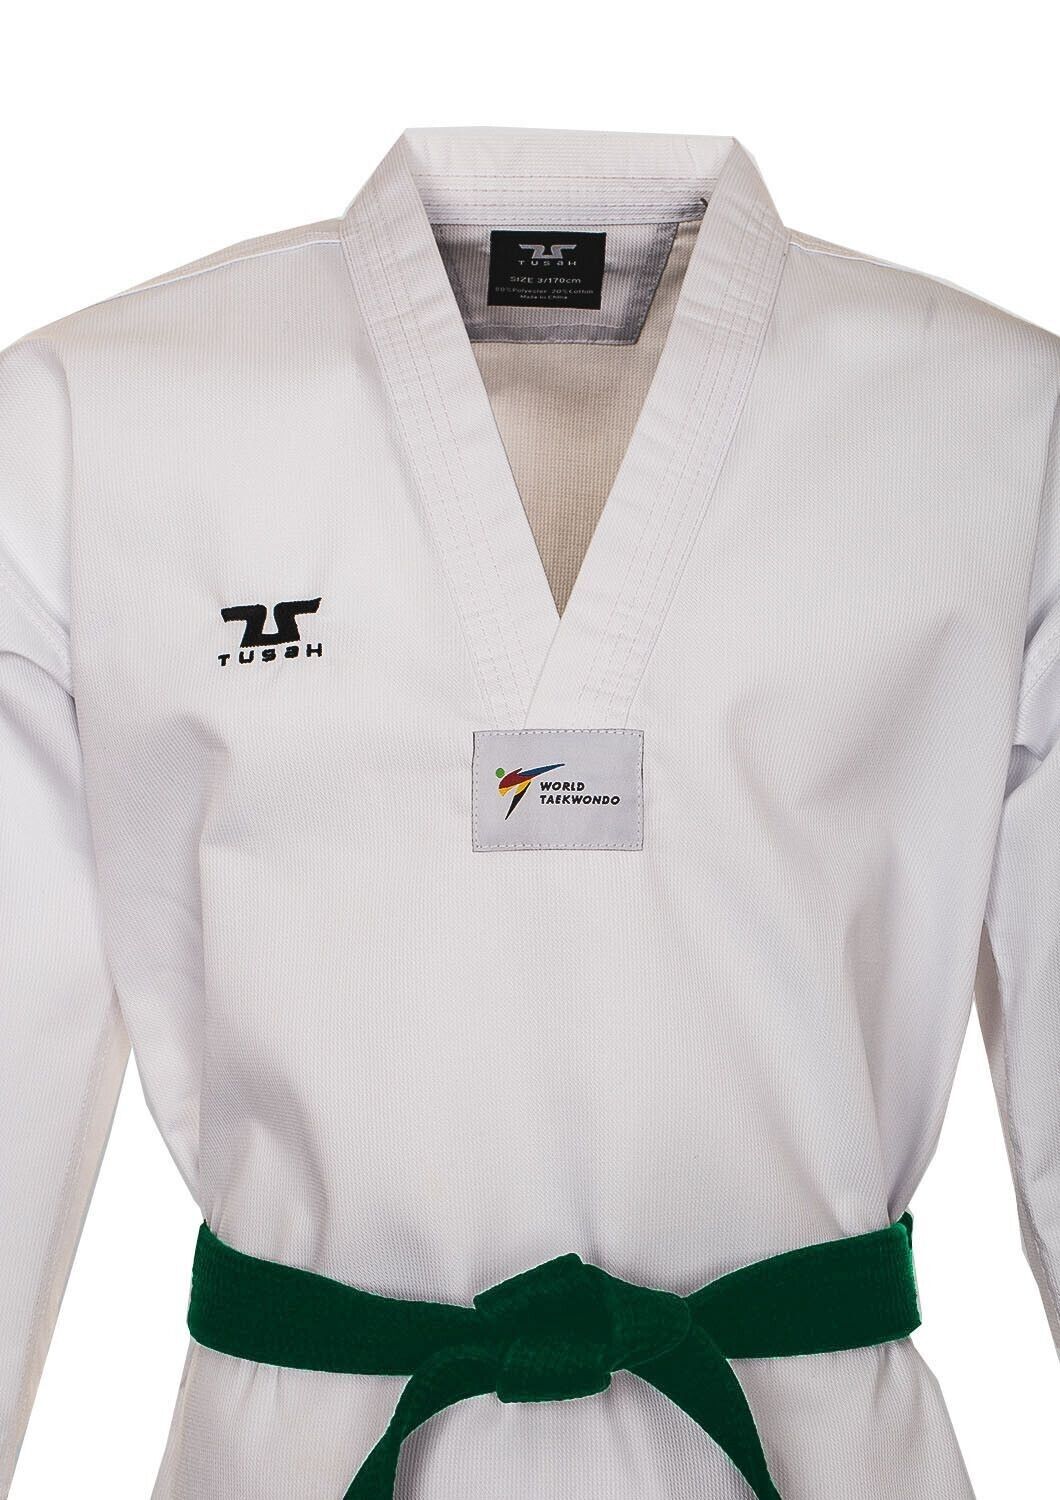 Tusah WT Approved Kids Taekwondo Dobok - Budo Online